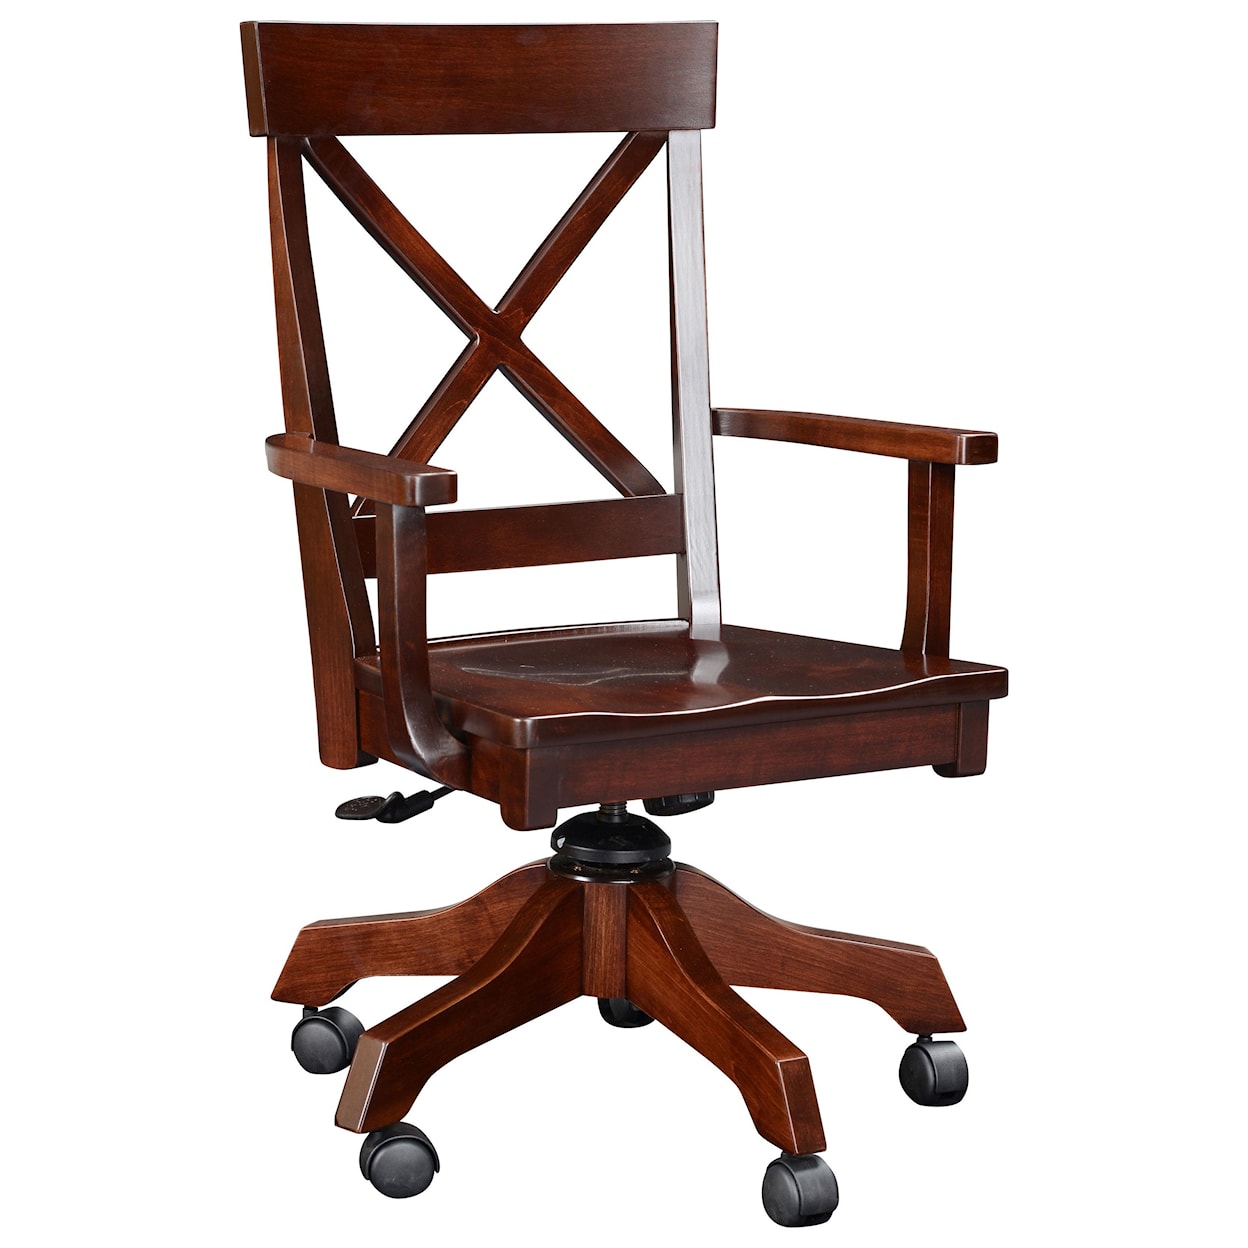 Wengerd Wood Products Singleton Desk Chair